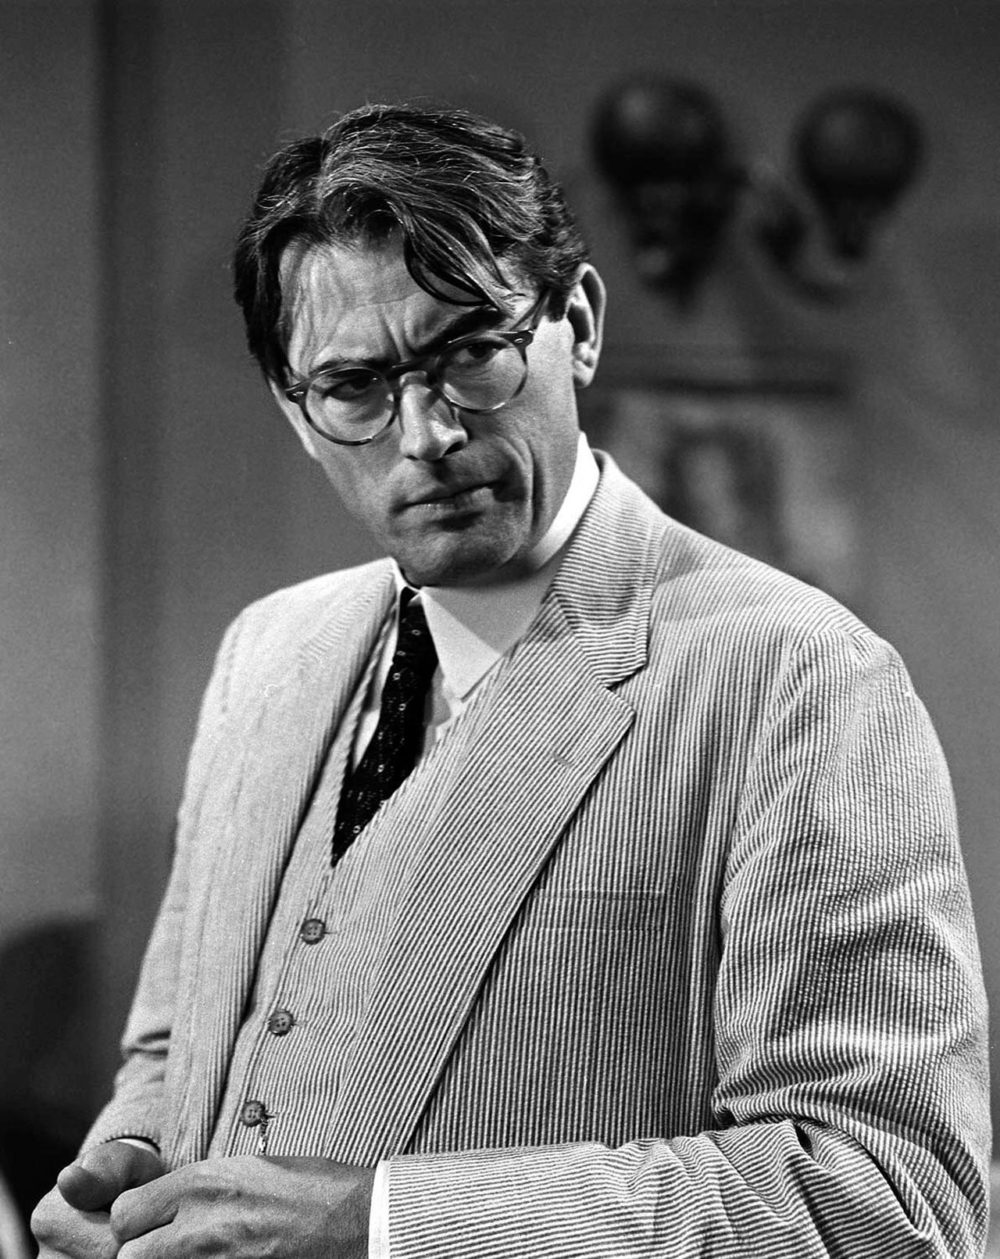 Seersucker - Atticus Finch